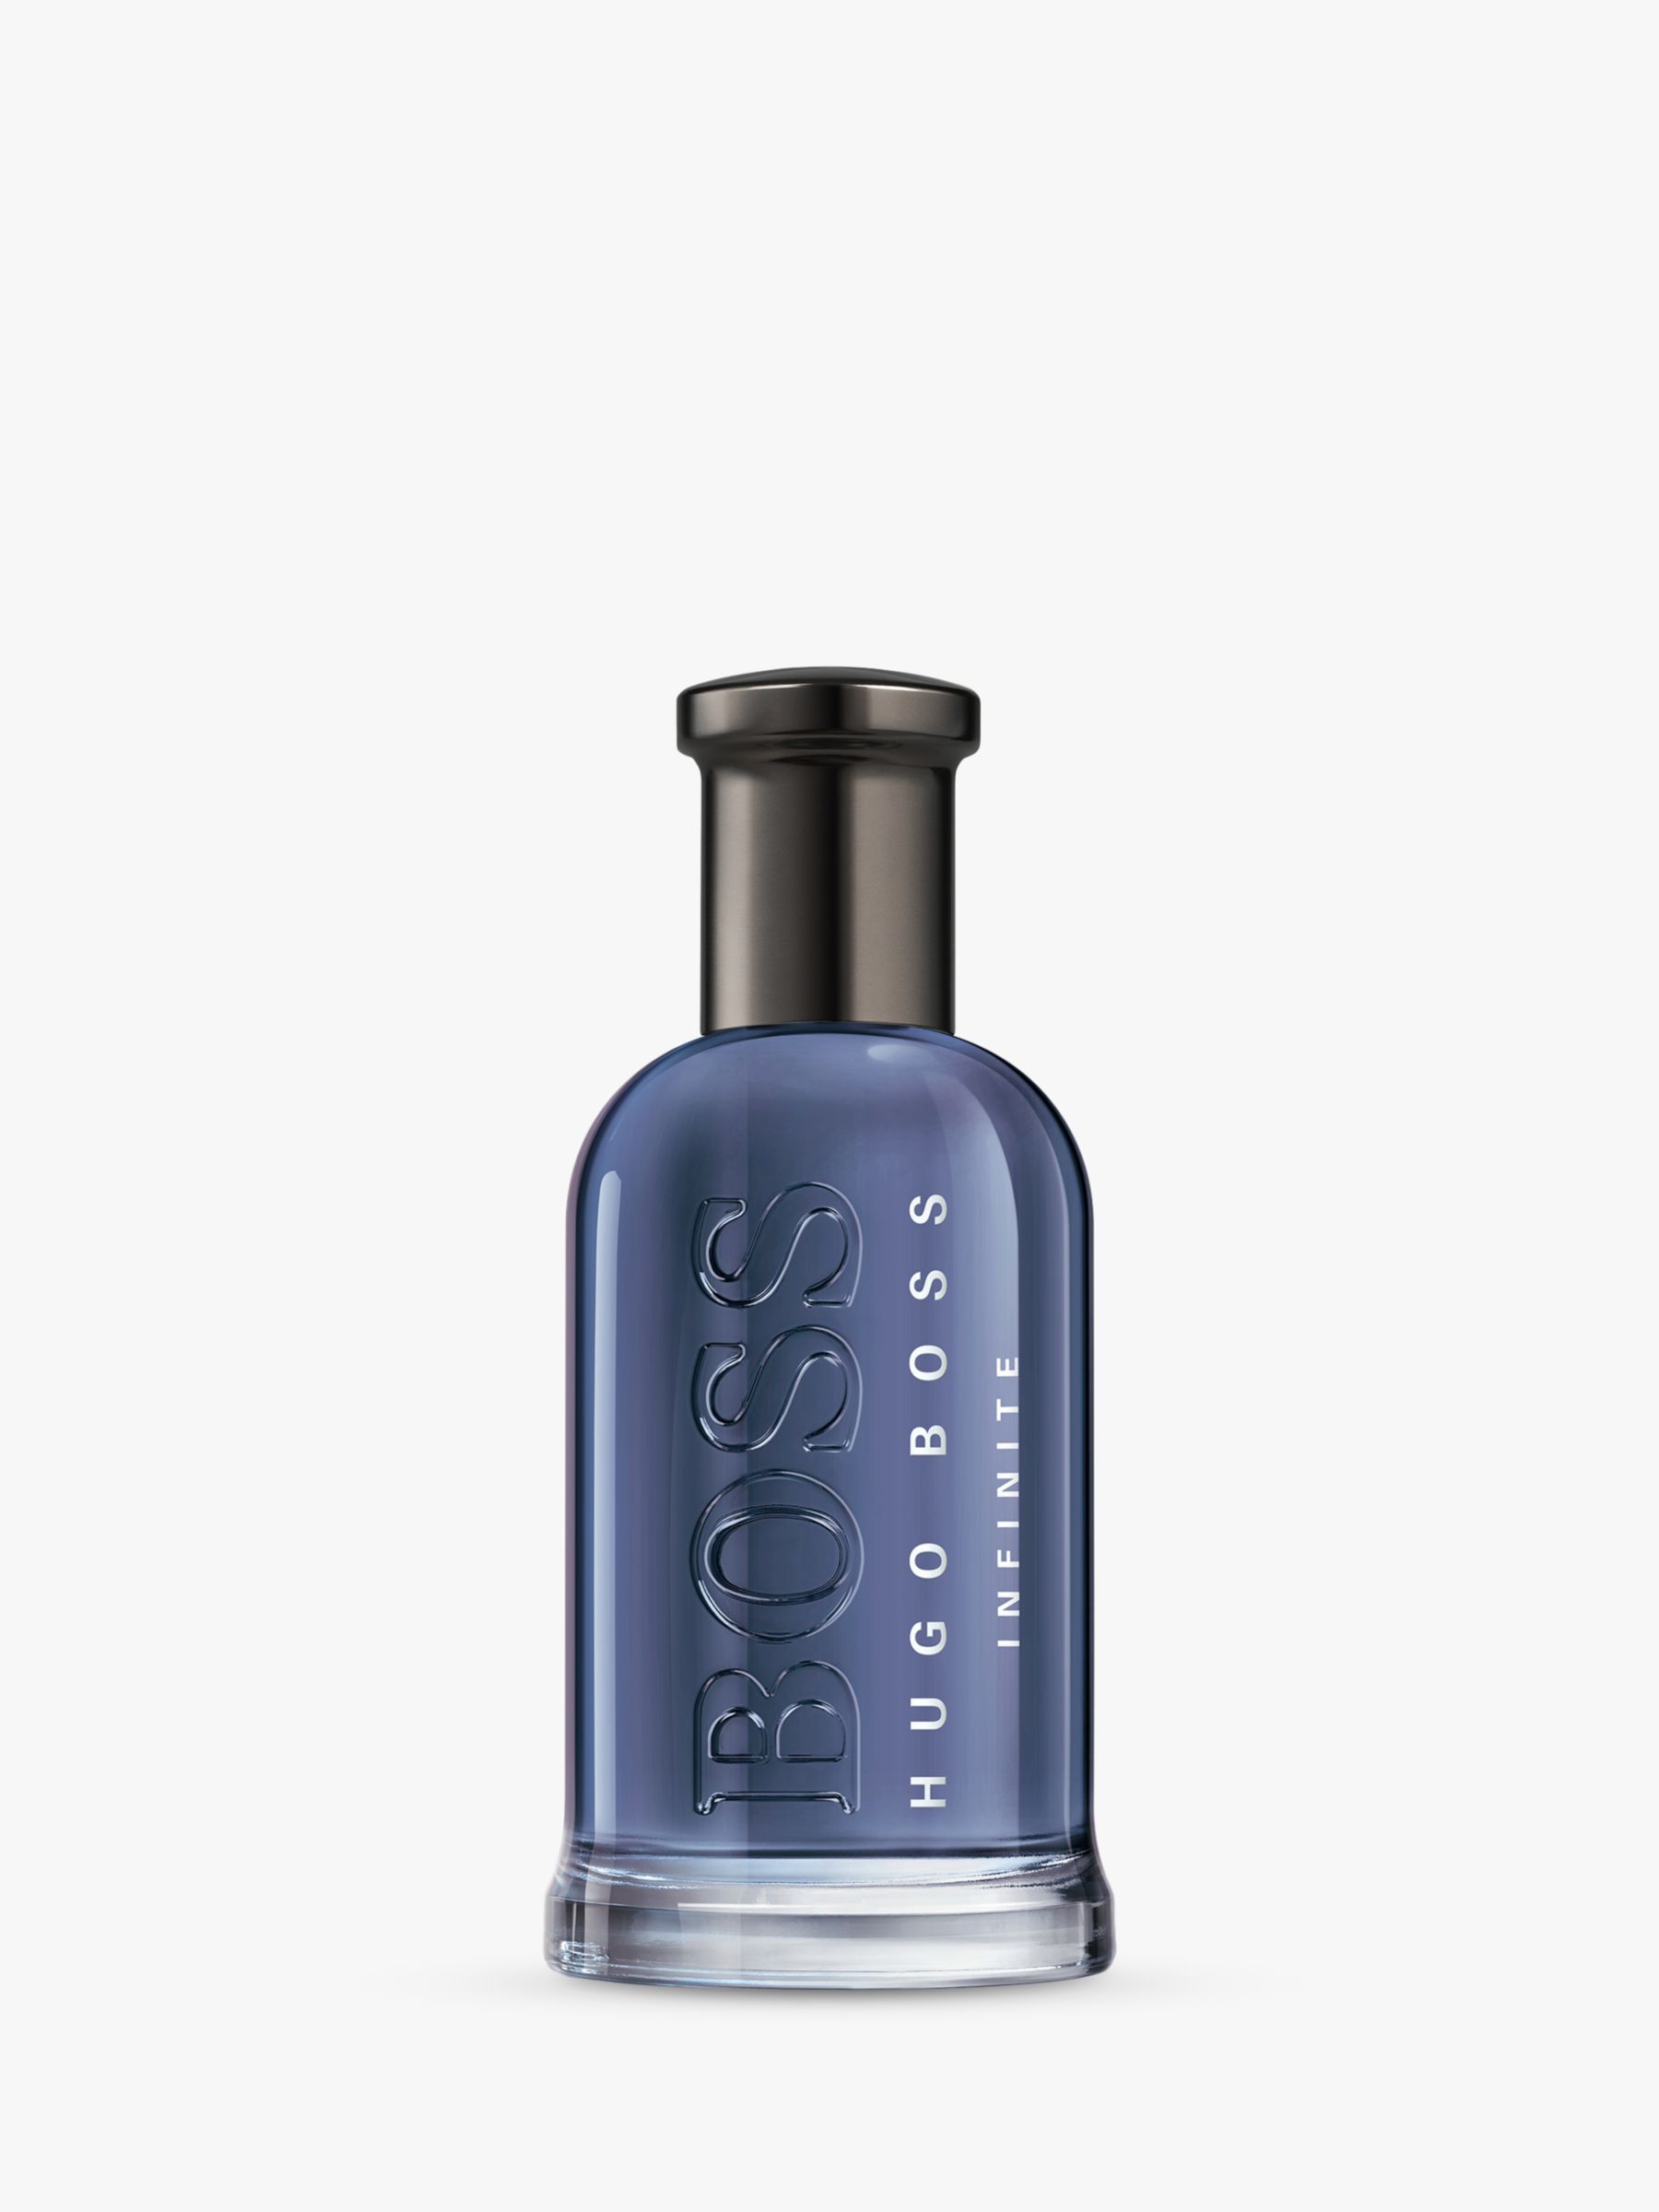 HUGO BOSS BOSS Bottled Infinite Eau de Parfum at John Lewis & Partners